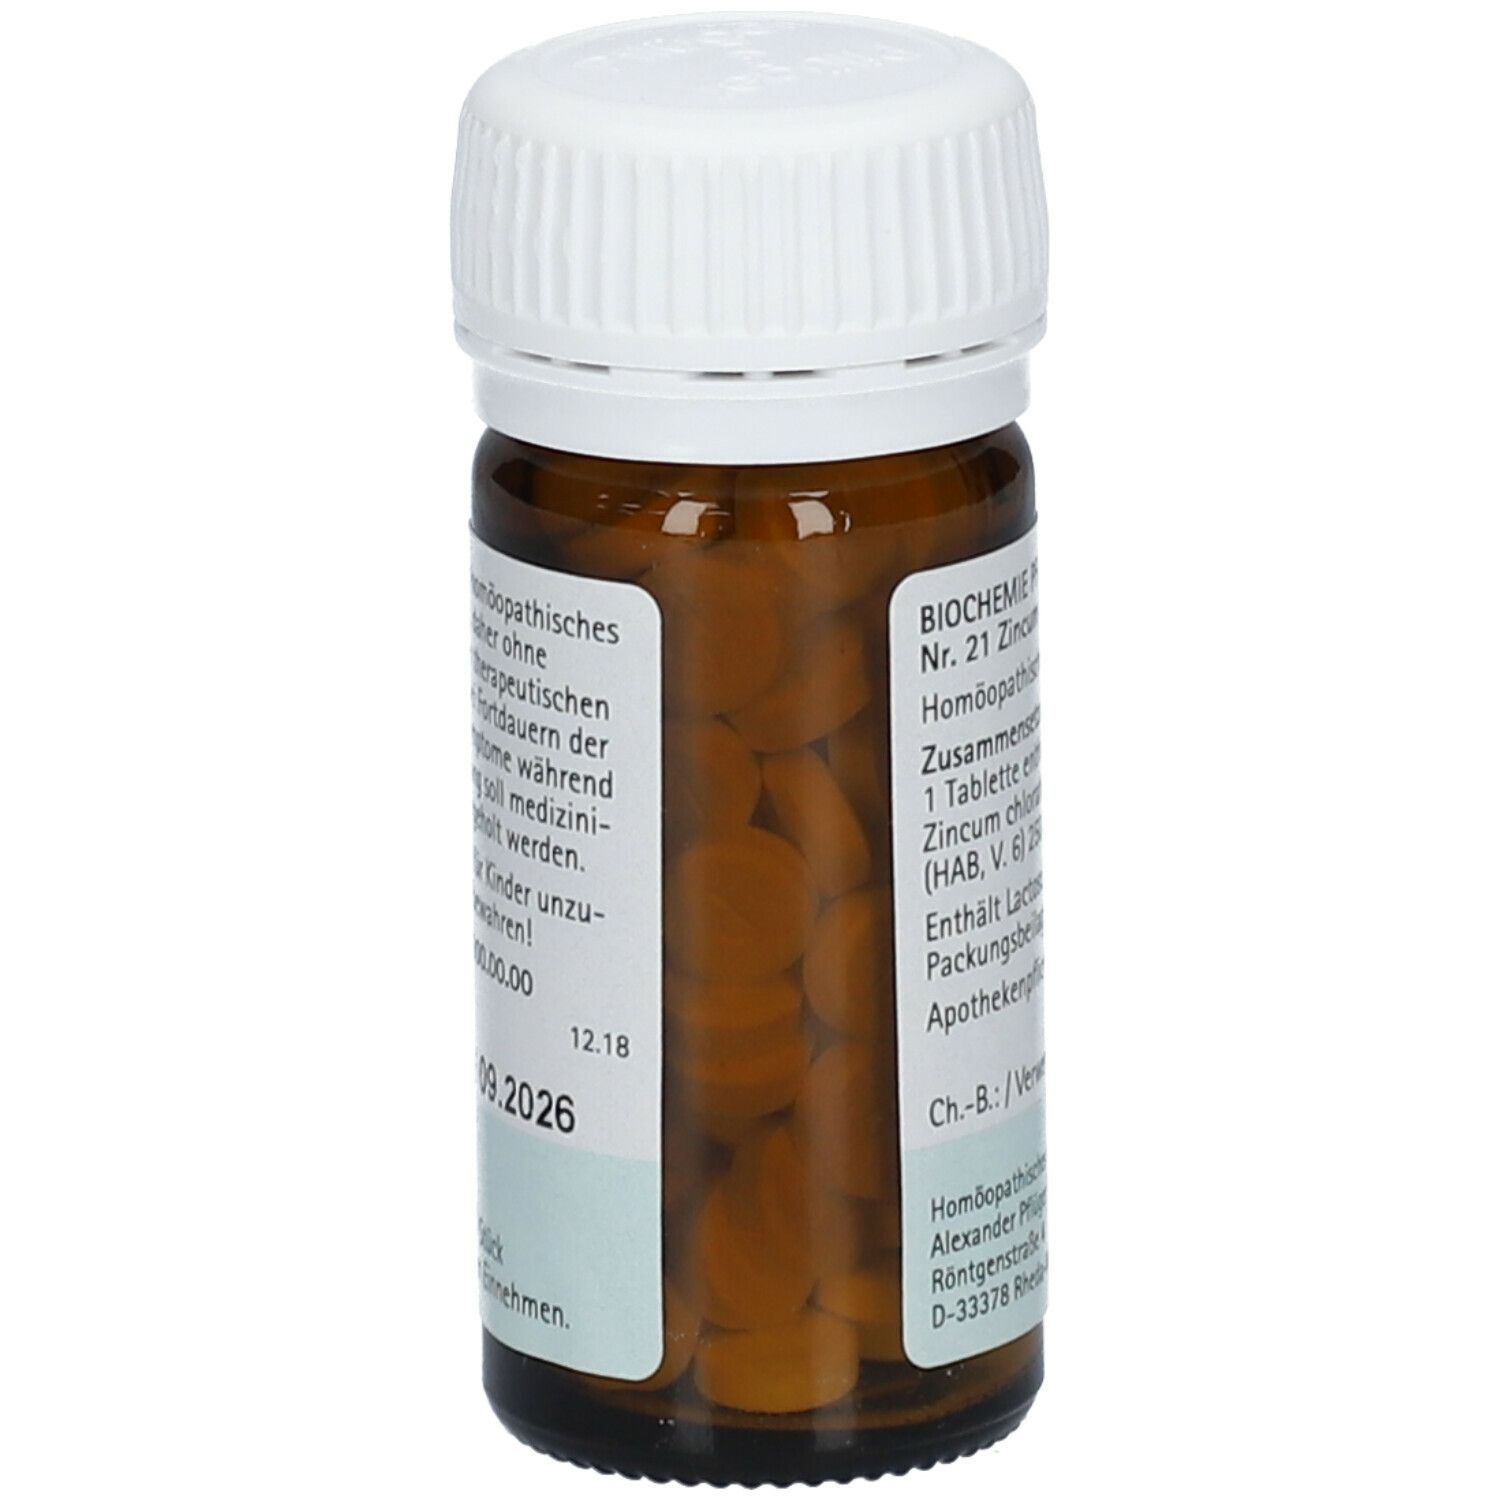 Biochemie Pflüger® Nr. 21 Zincum chloratum D6 Tabletten